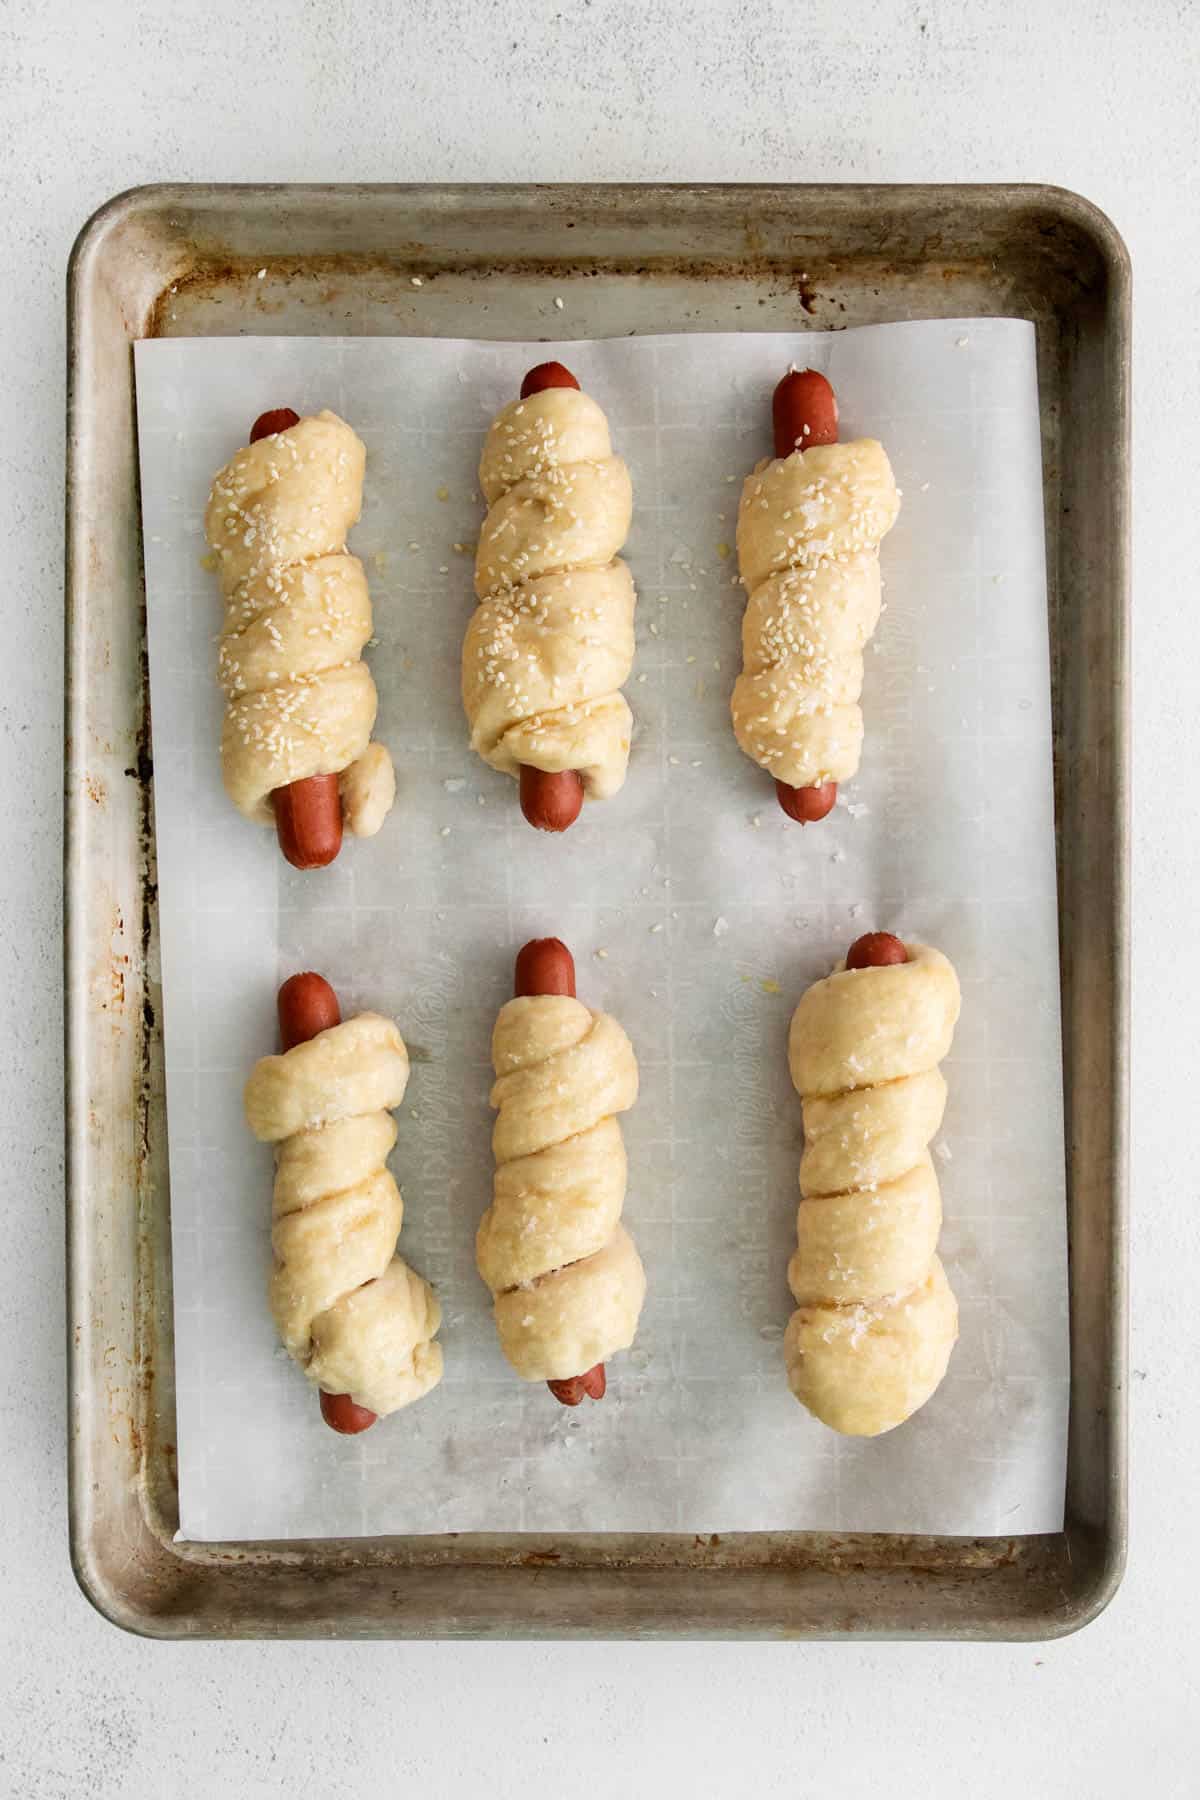 Hot dogs wrapped in pretzel dough on a baking sheet.